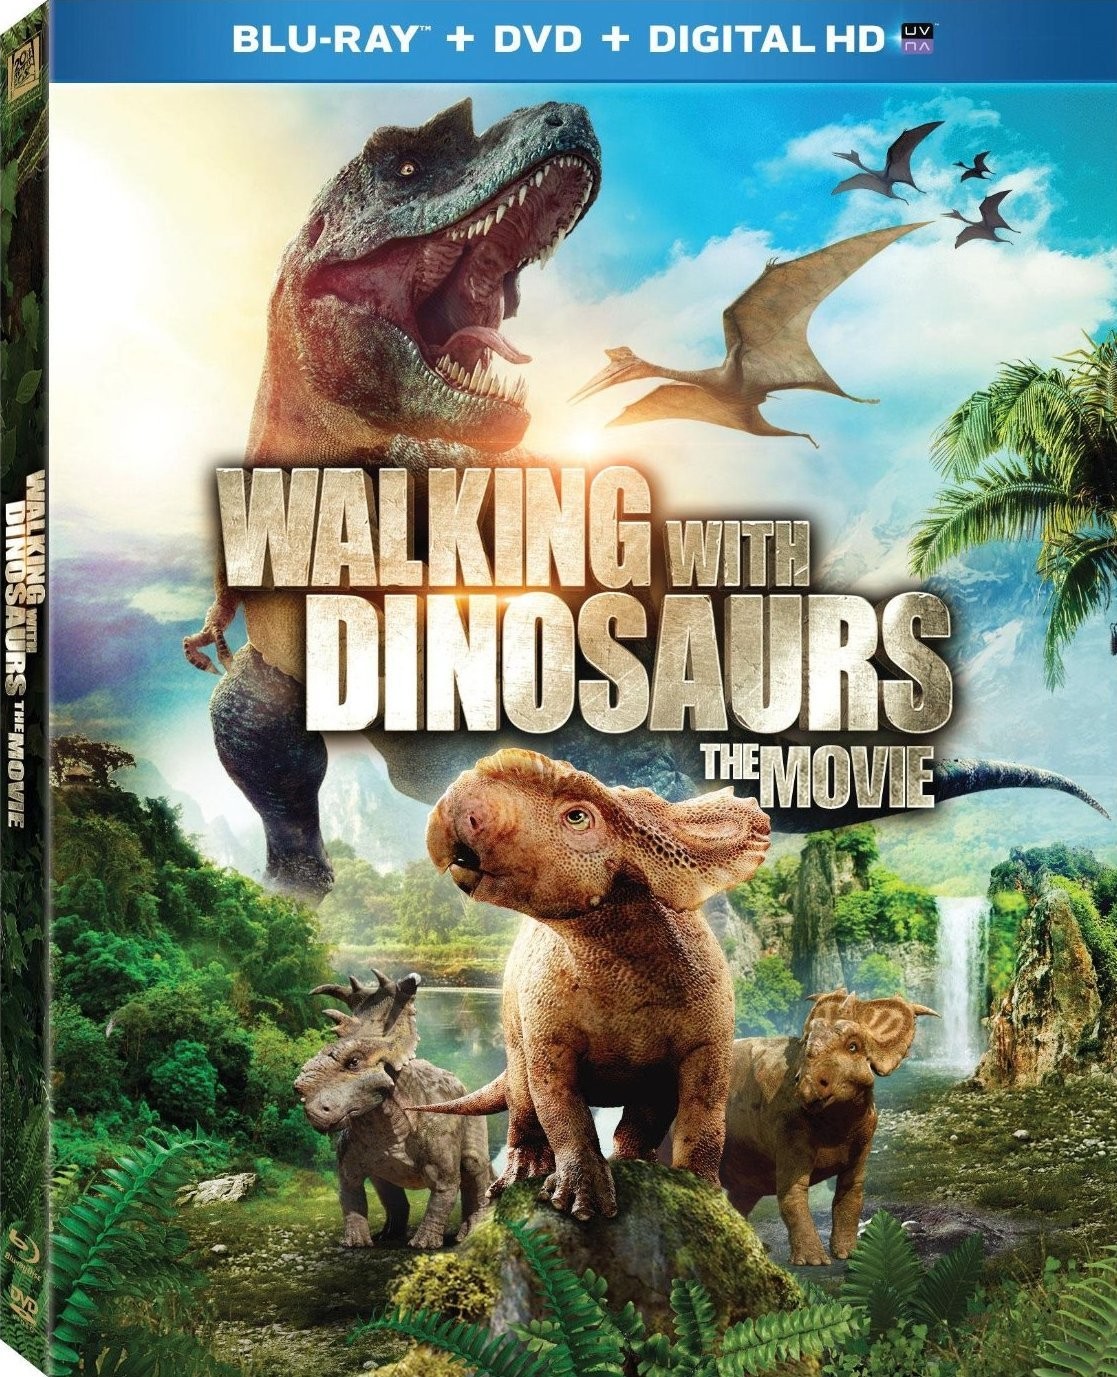  与恐龙同行/与龙同行/Walking with Dinosaurs(2013)  80-020 